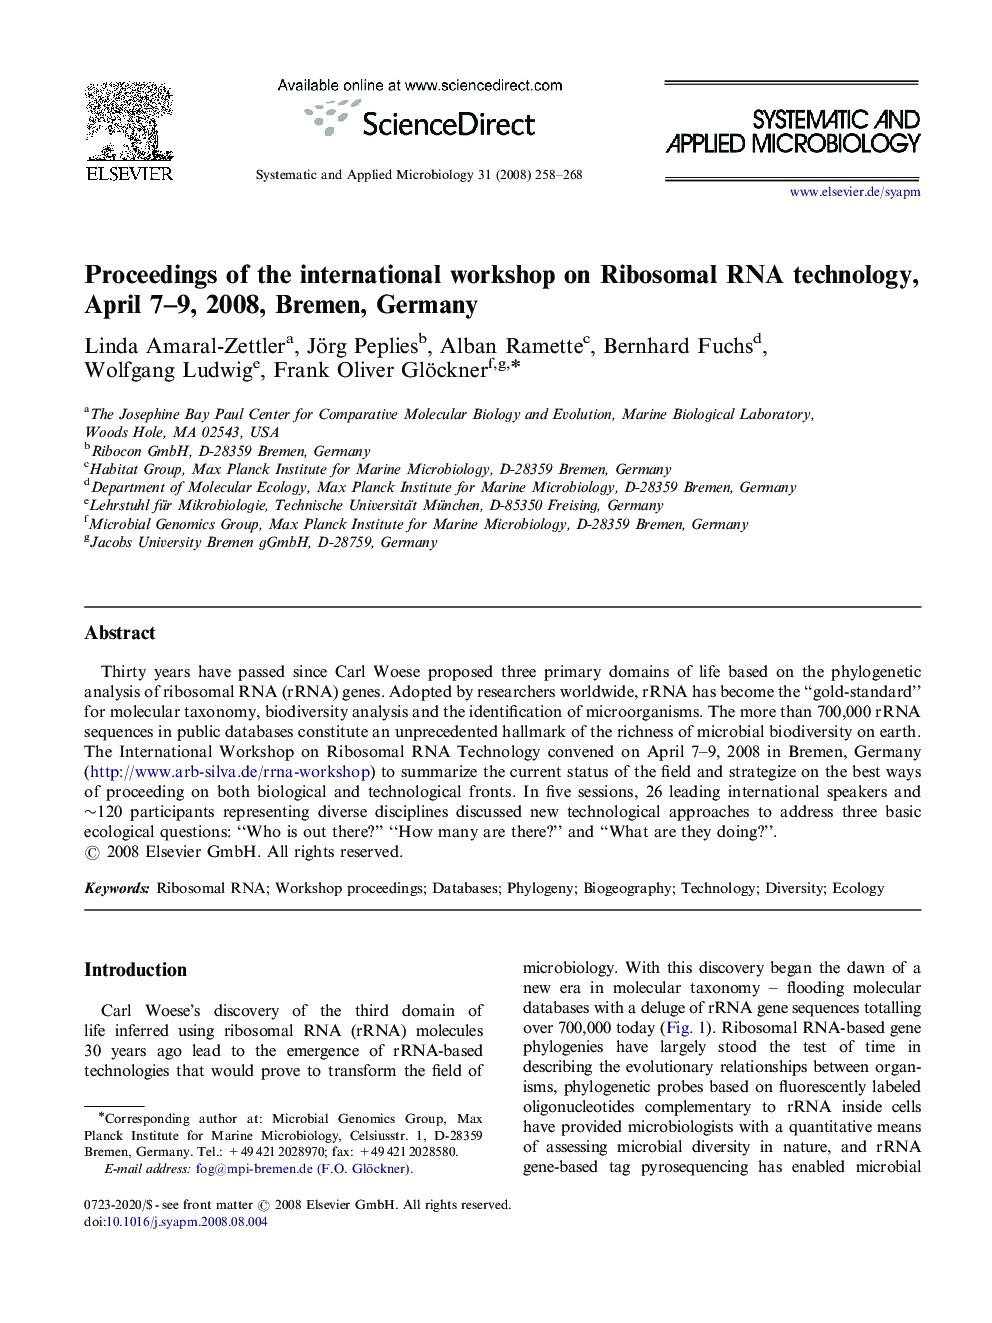 Proceedings of the international workshop on Ribosomal RNA technology, April 7–9, 2008, Bremen, Germany